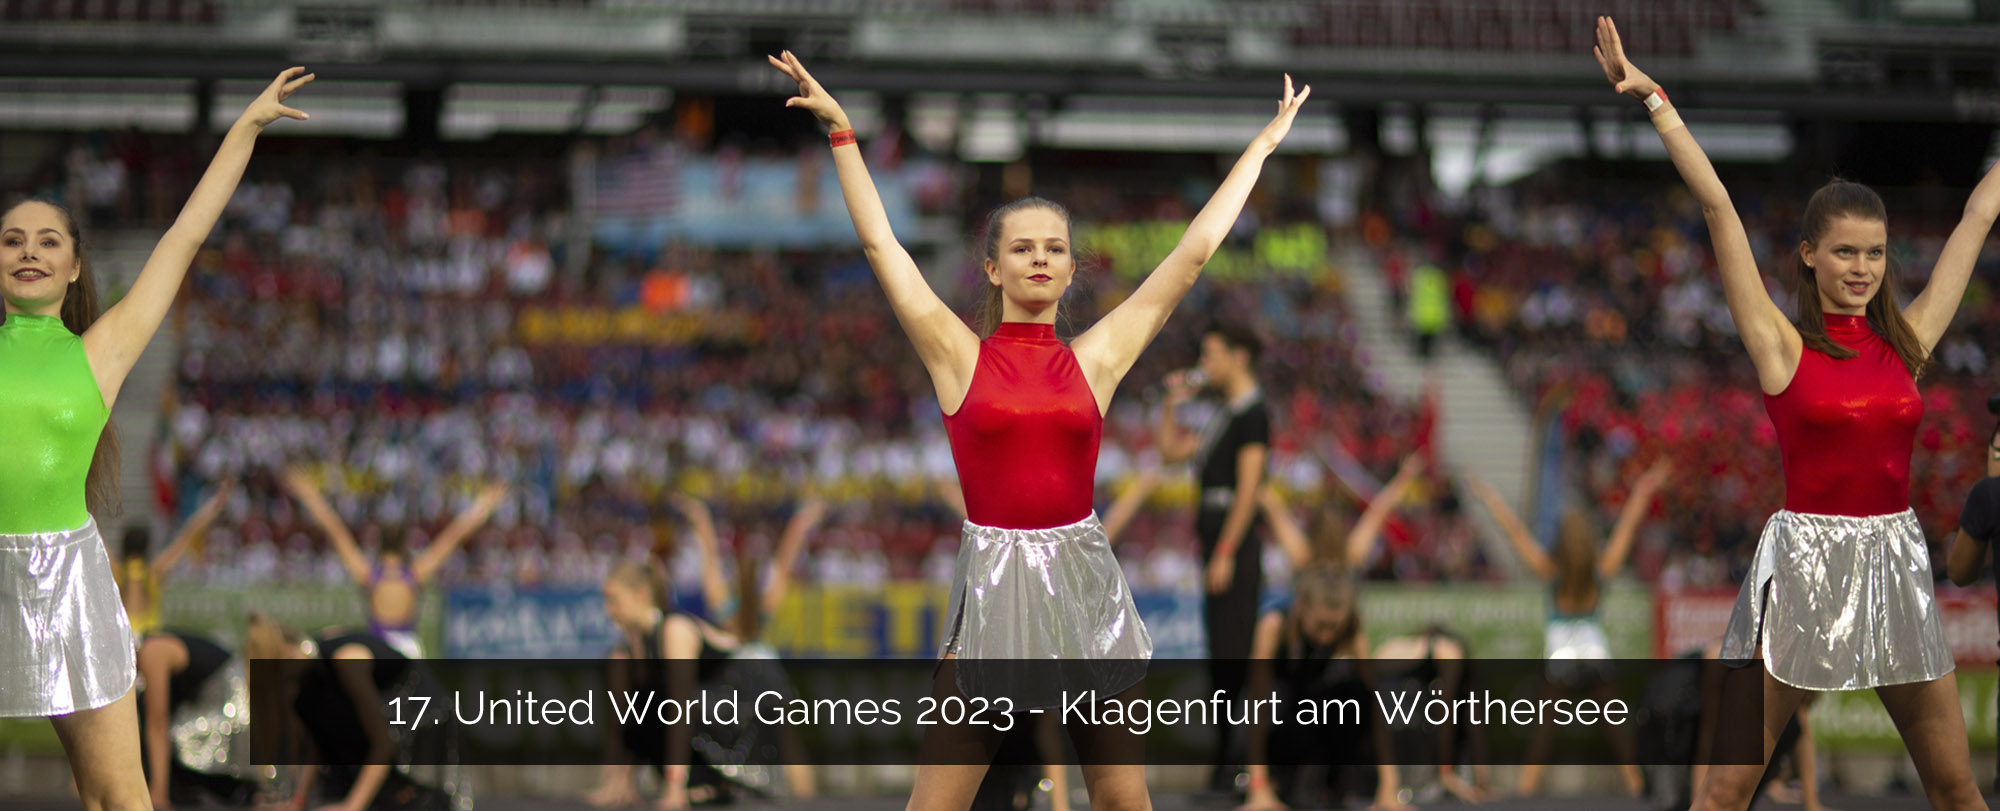 United World Games 2023